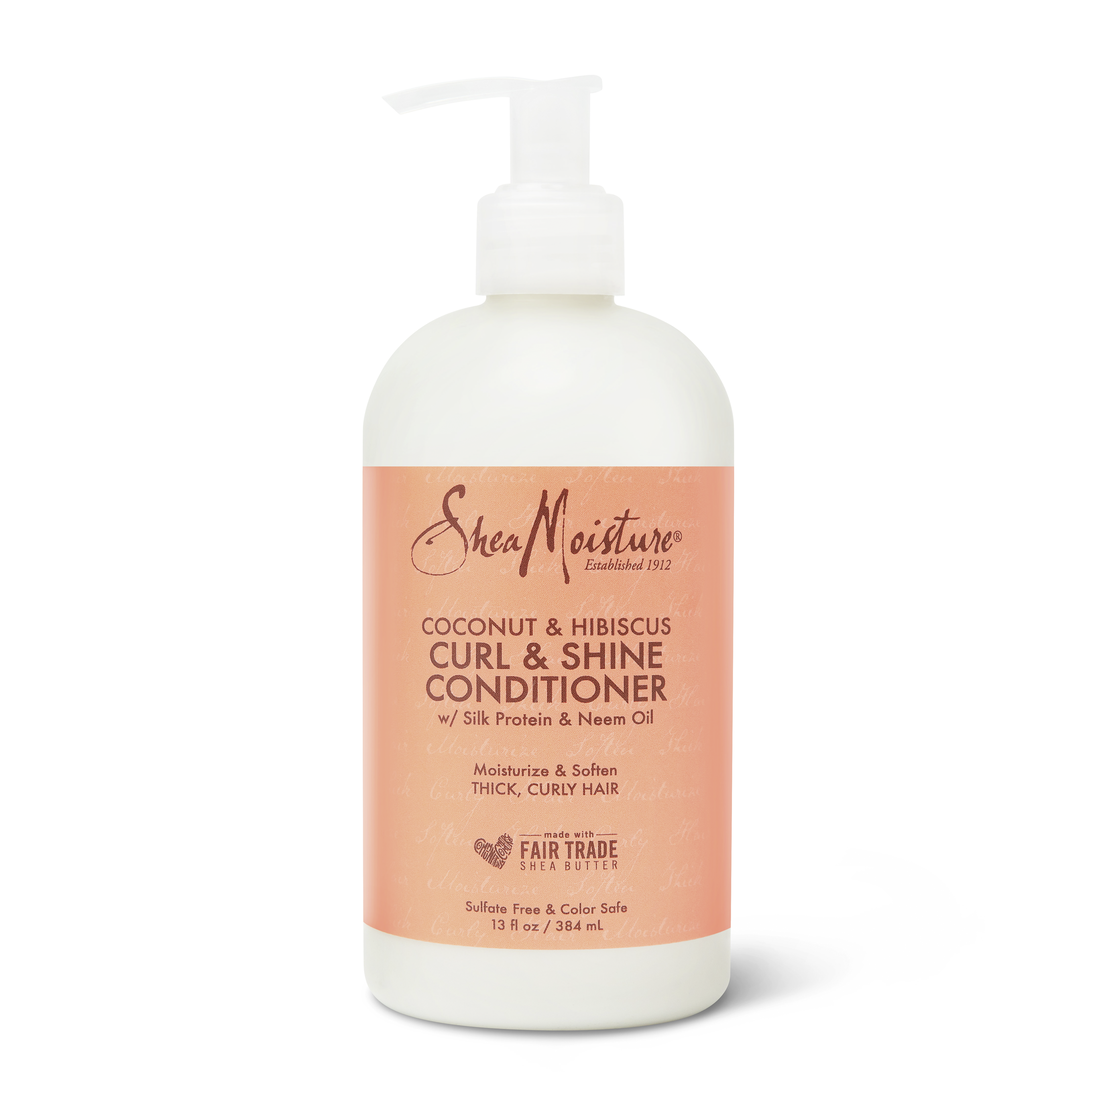 SheaMoisture Coconut & Hibiscus Curl & Shine Conditioner 384mL - The U Shop